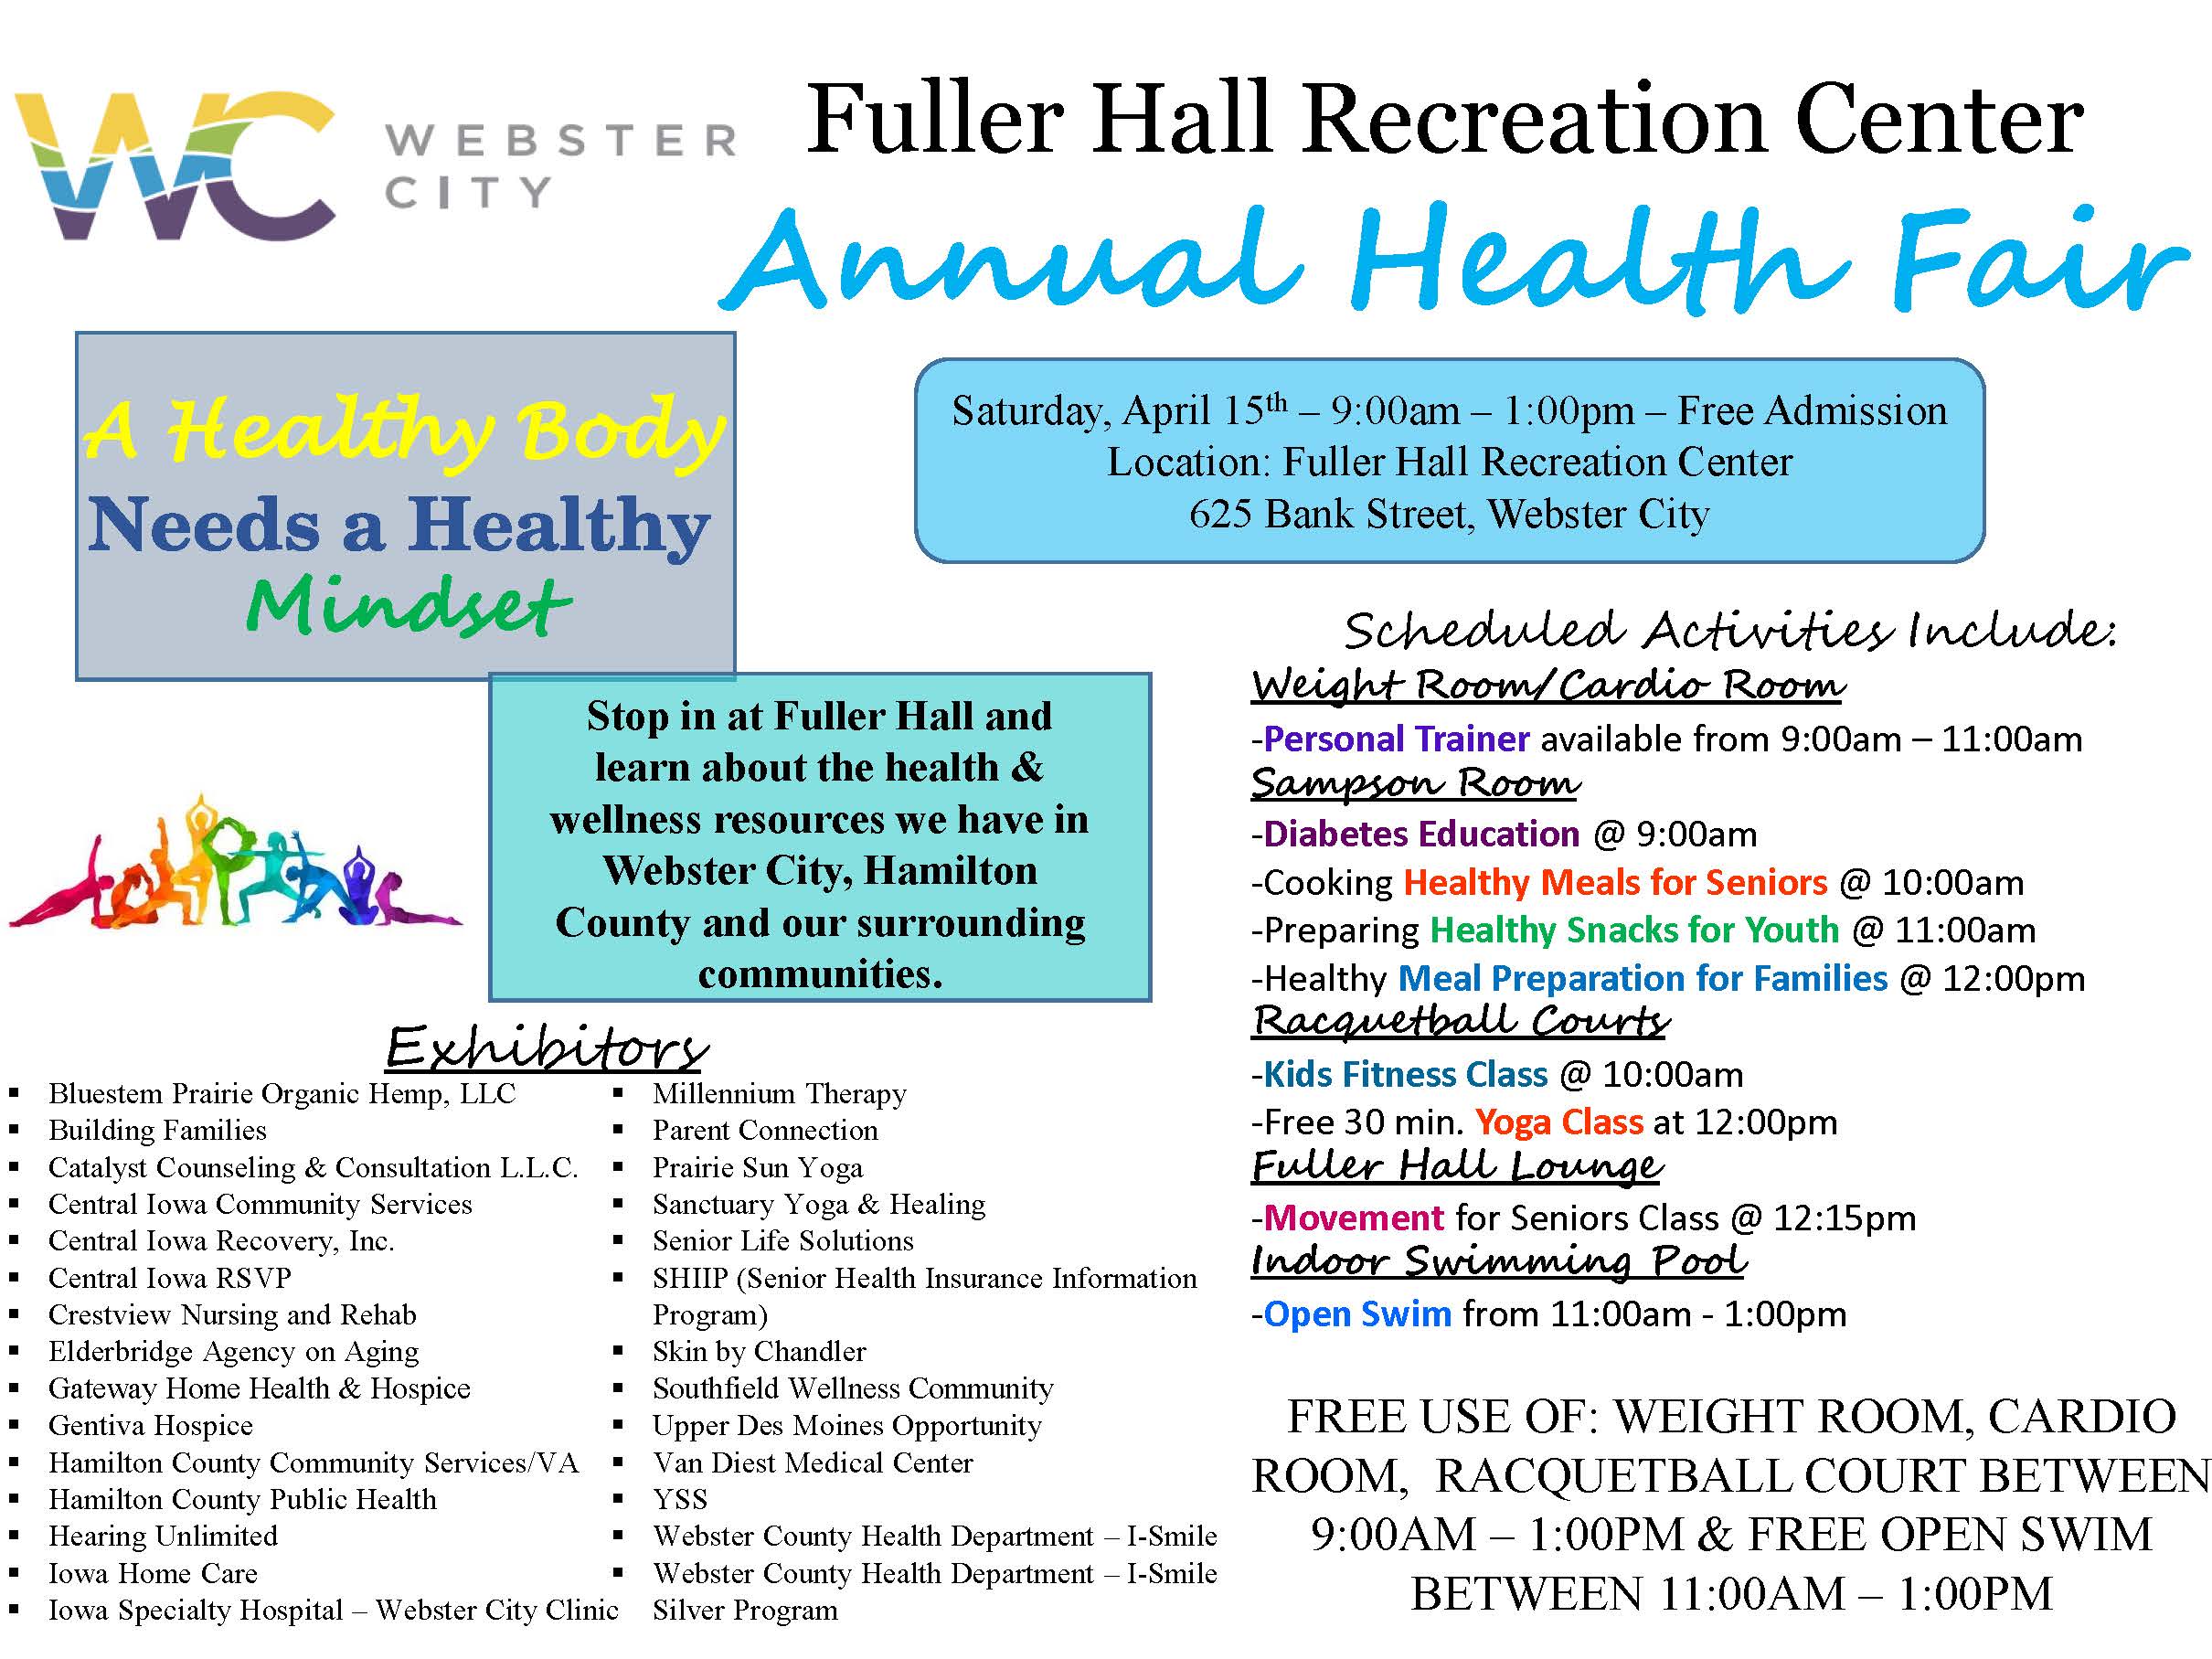 Fuller Hall Recreation Center’s Annual Health Fair – Webster City